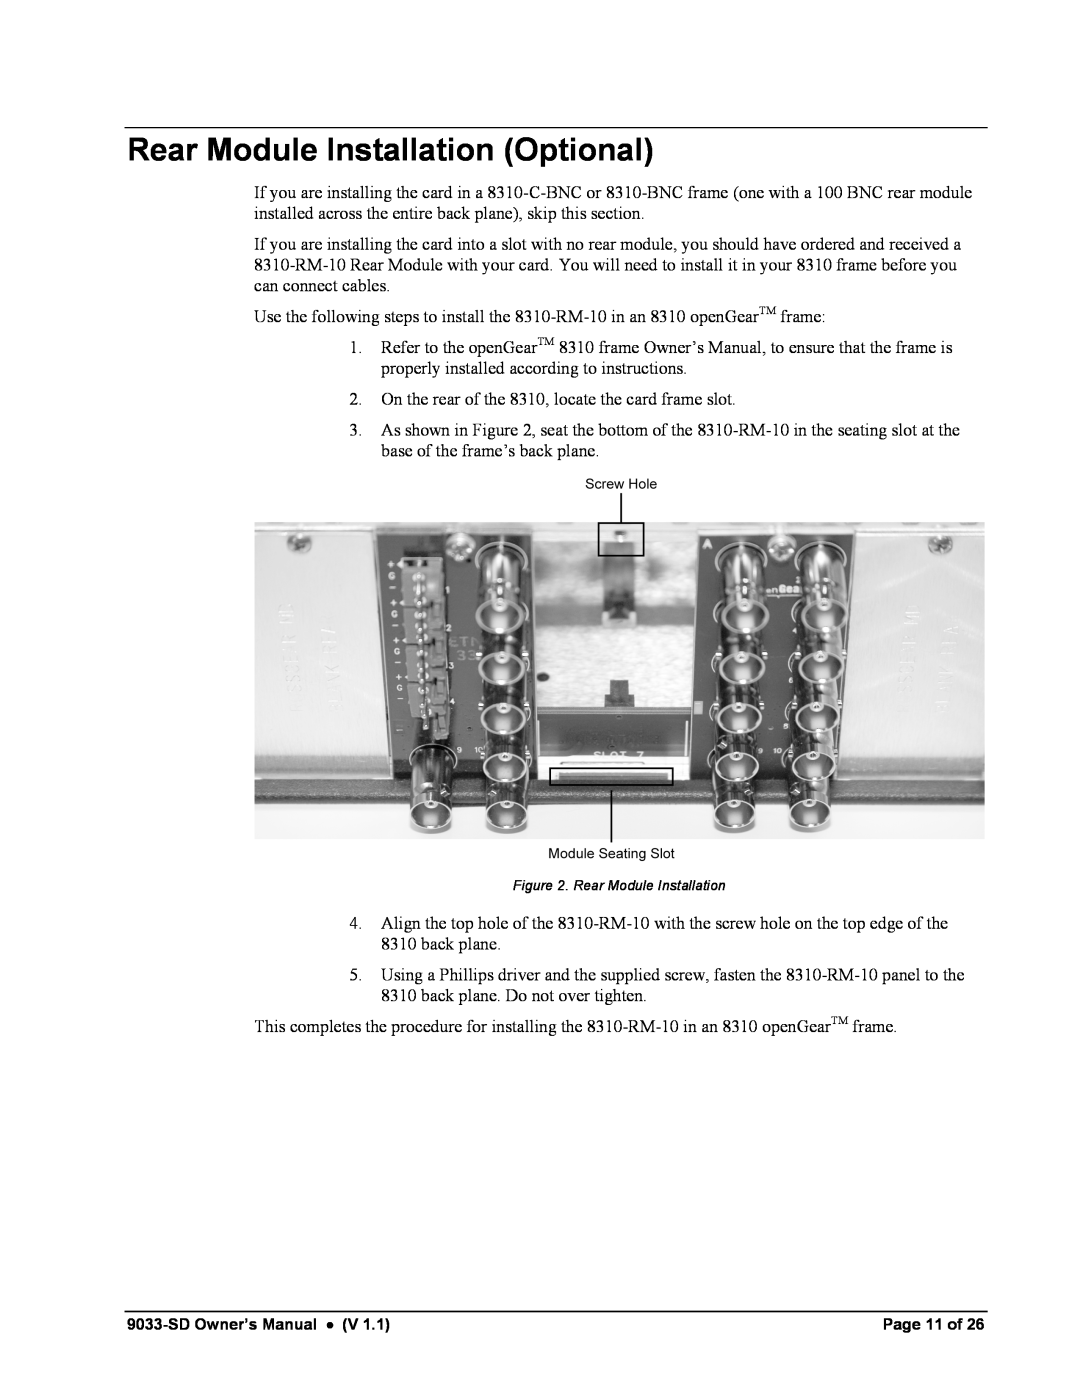 Cobalt Networks 9033-SD owner manual Rear Module Installation Optional 